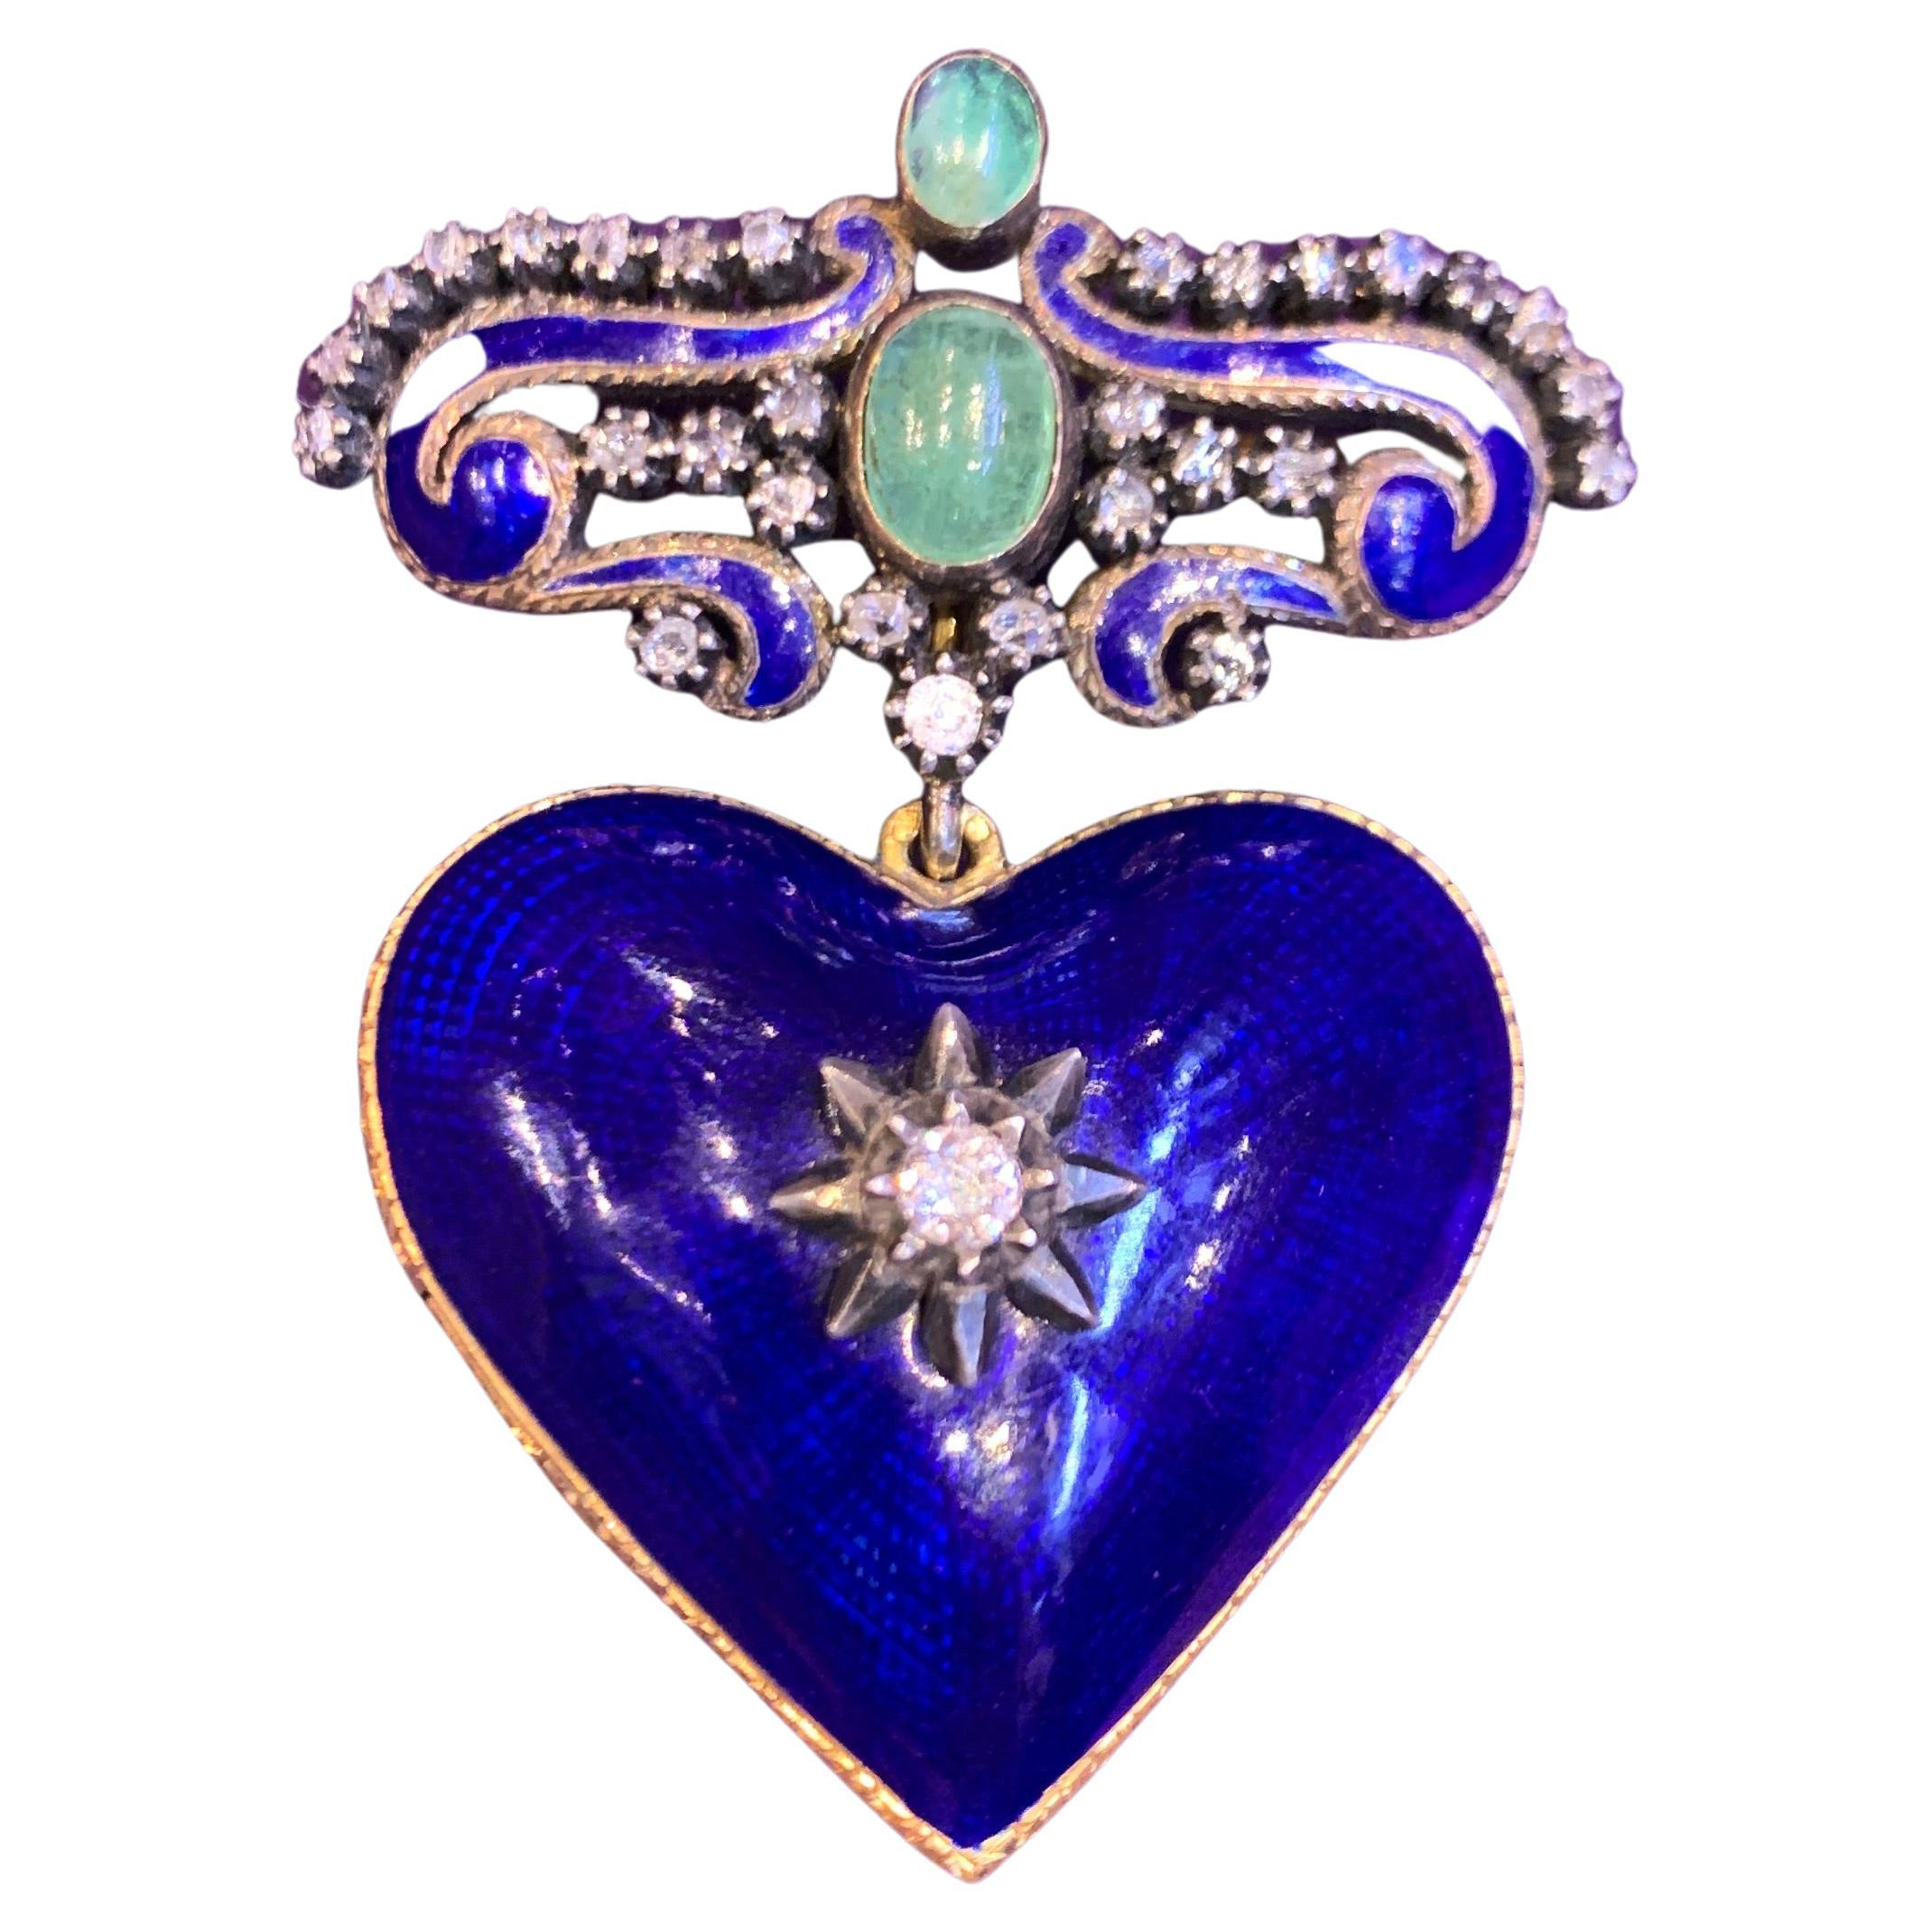 Antique Enamel Heart Shaped Locket Brooch